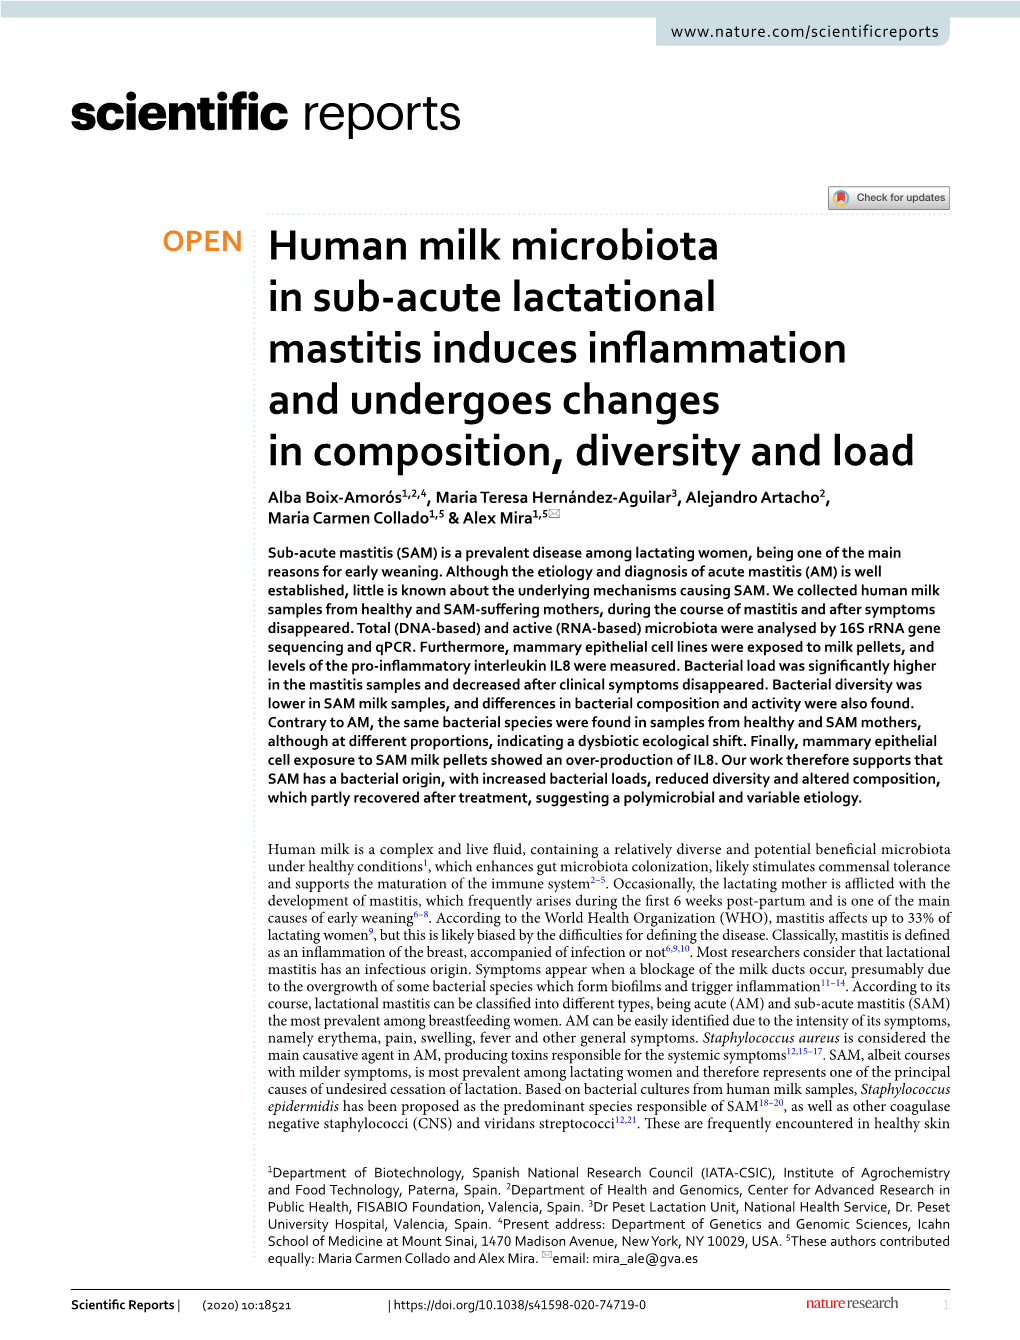 Human Milk Microbiota in Sub-Acute Lactational Mastitis Induces